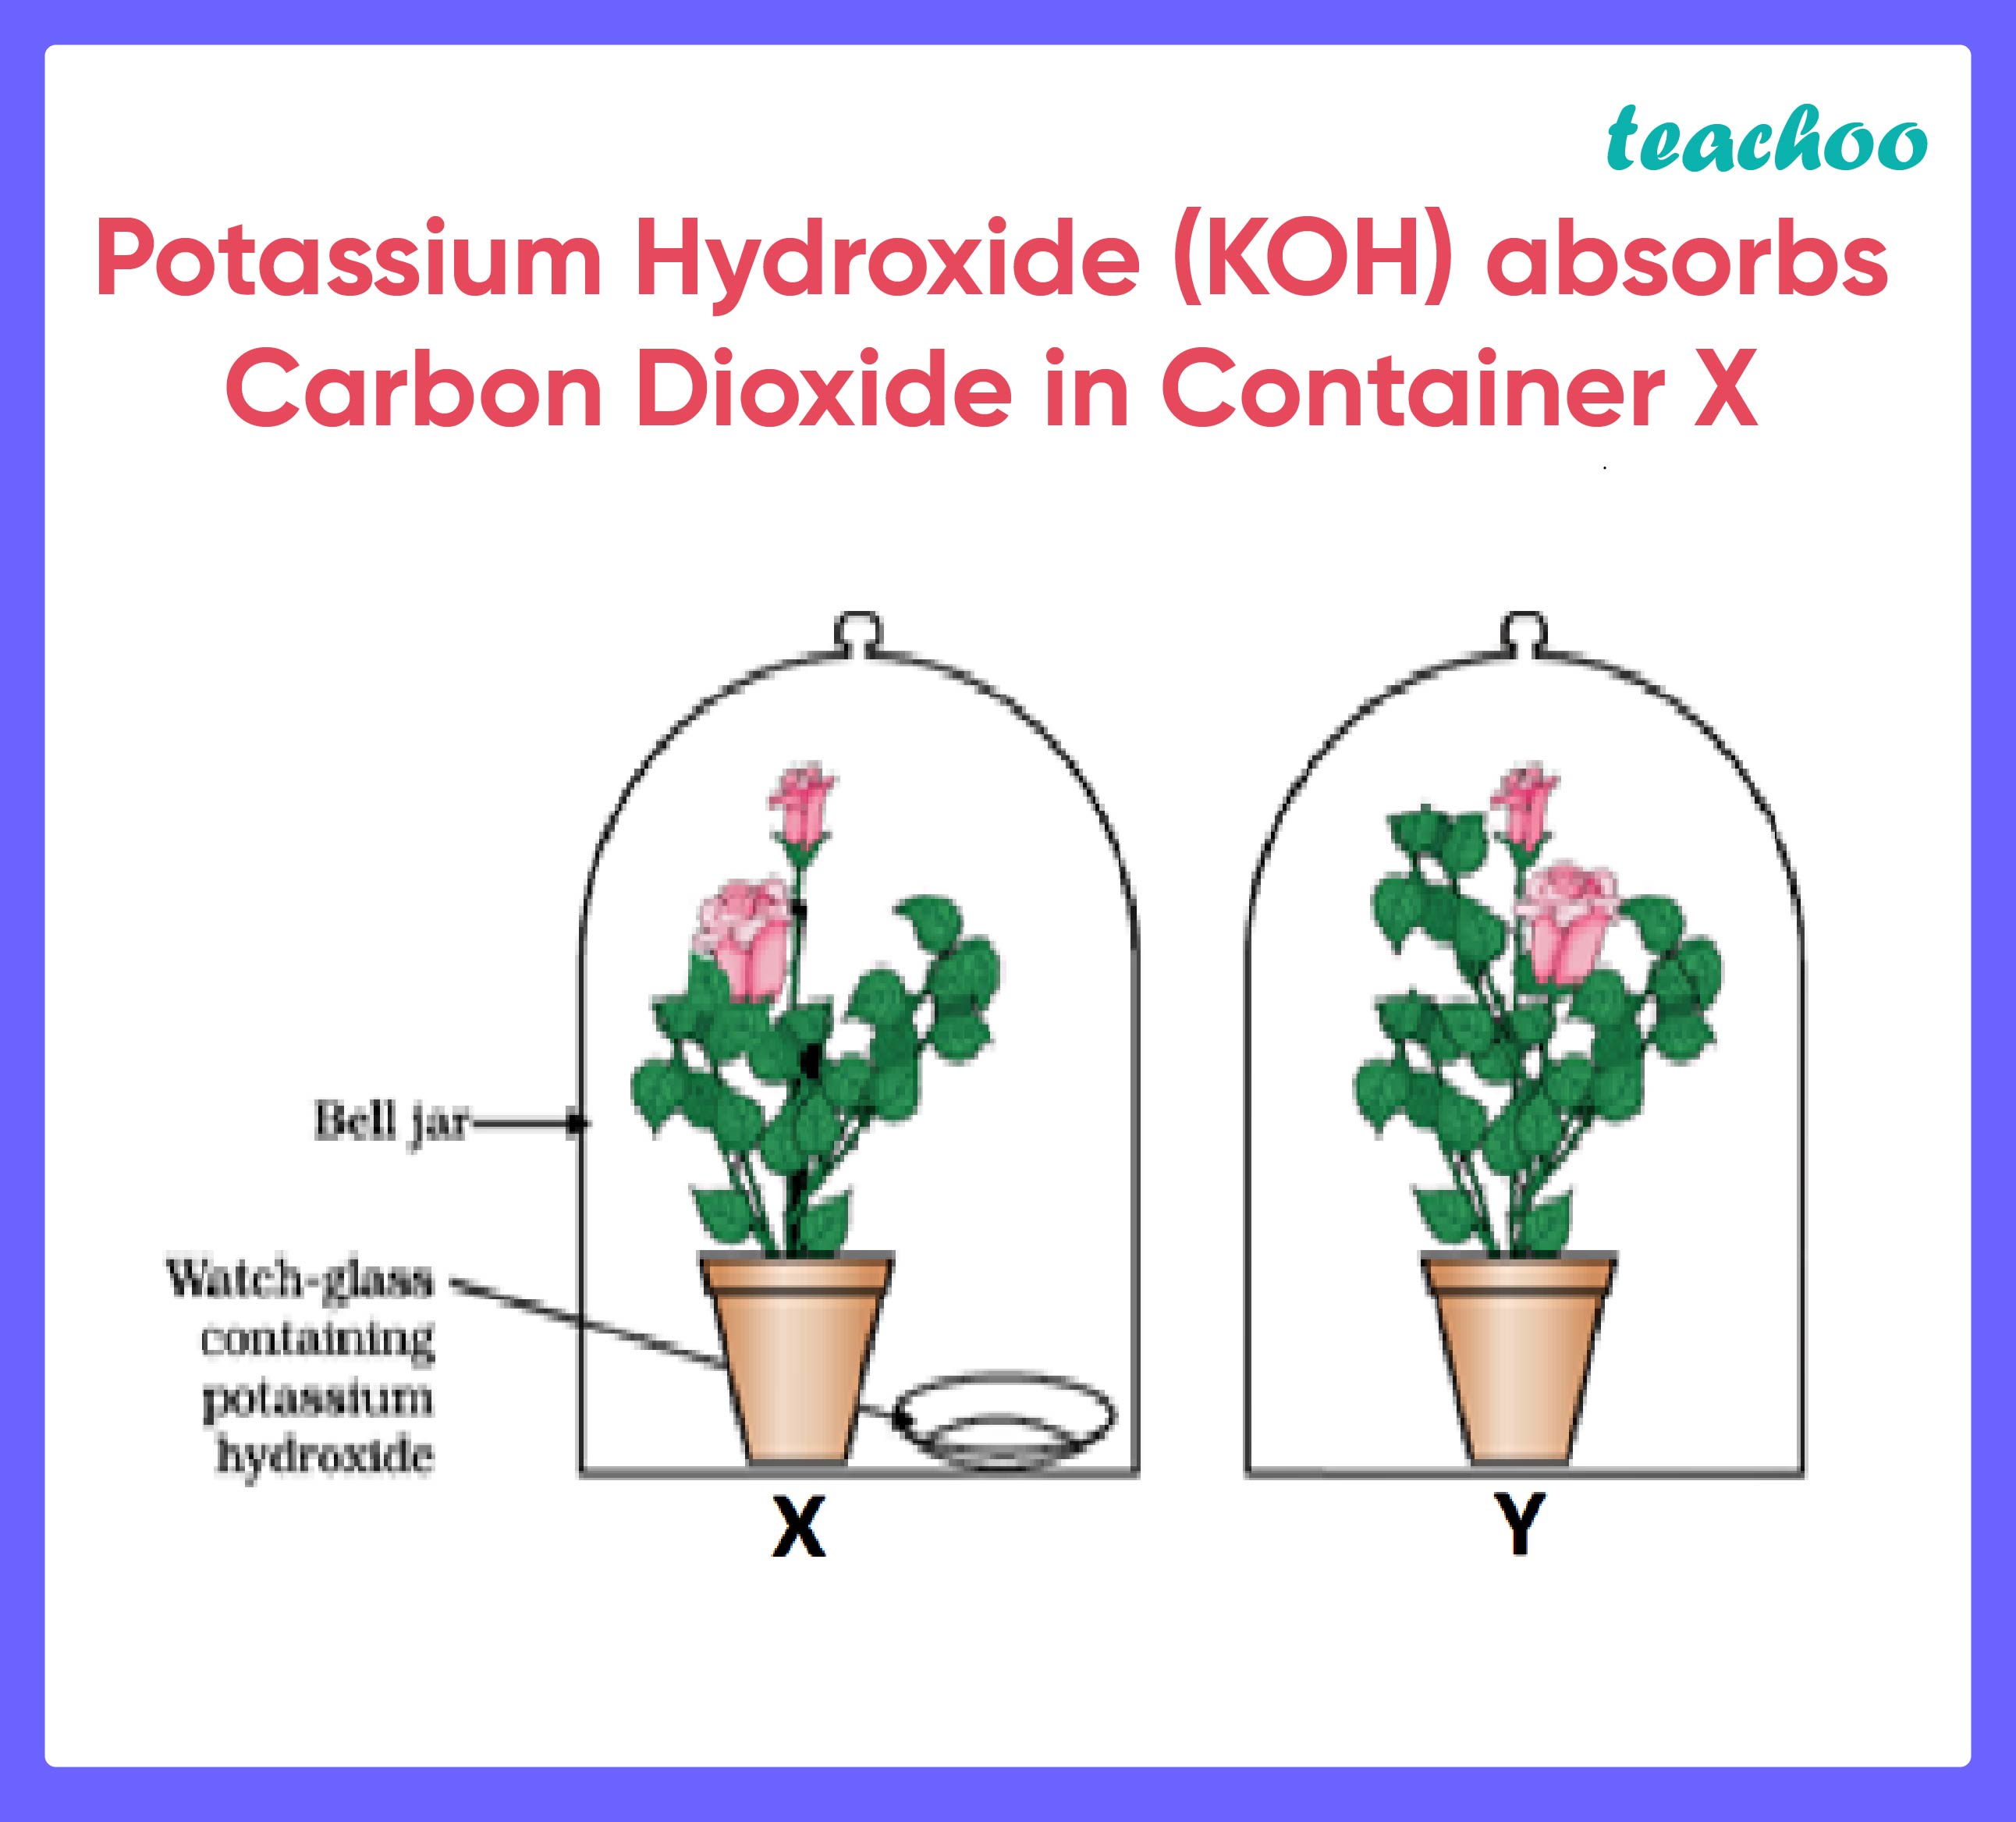 Potassium Hydroxide (KOH) absorbs Carbon Dioxide in Container X - Teachoo.jpg